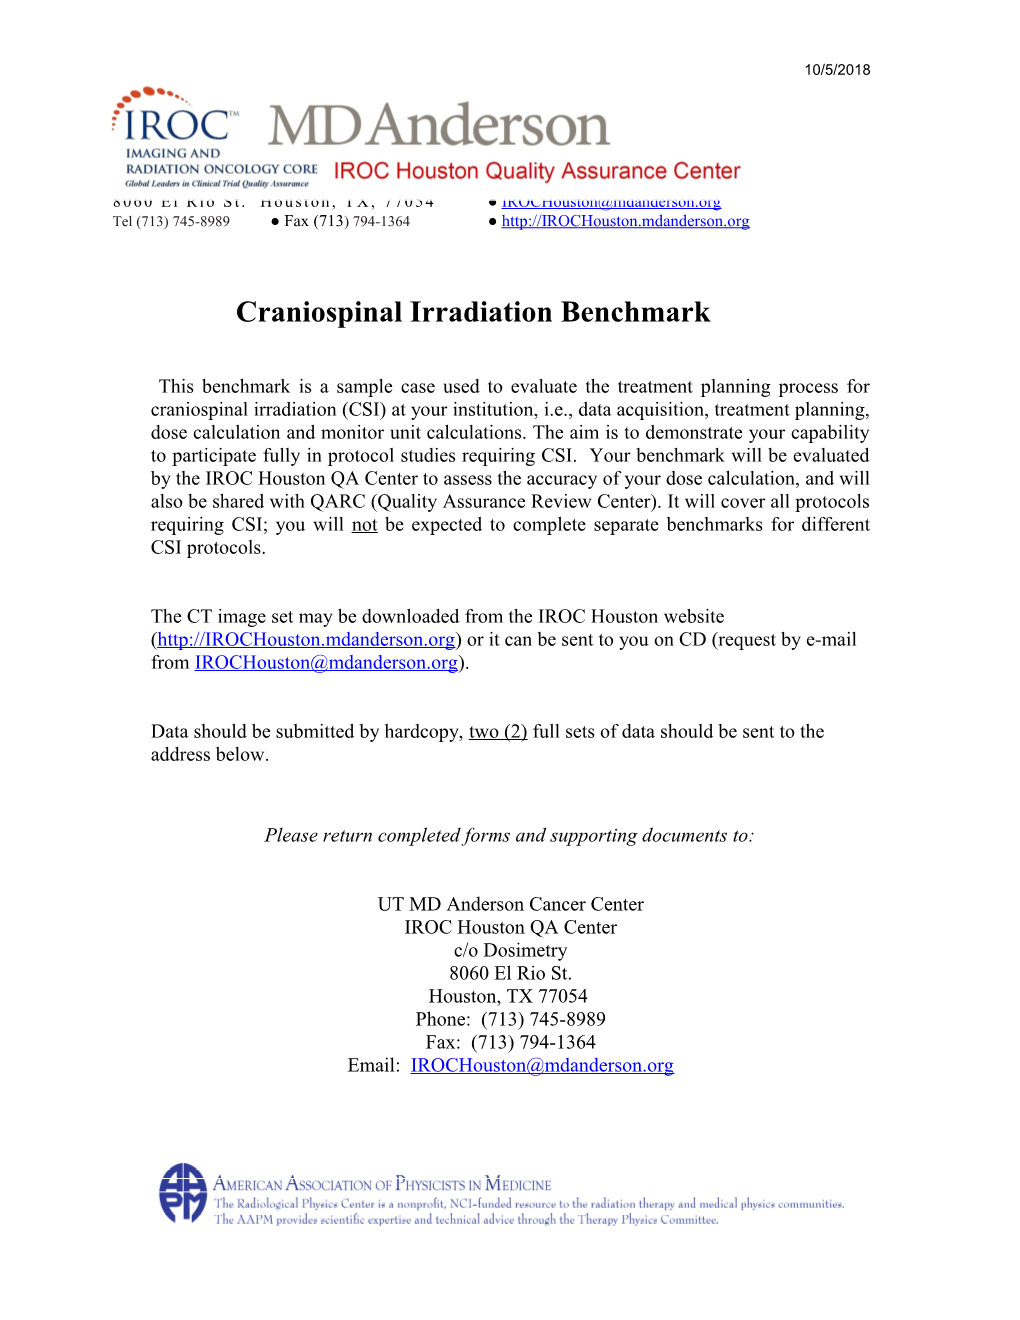 Craniospinal Irradiation Benchmark